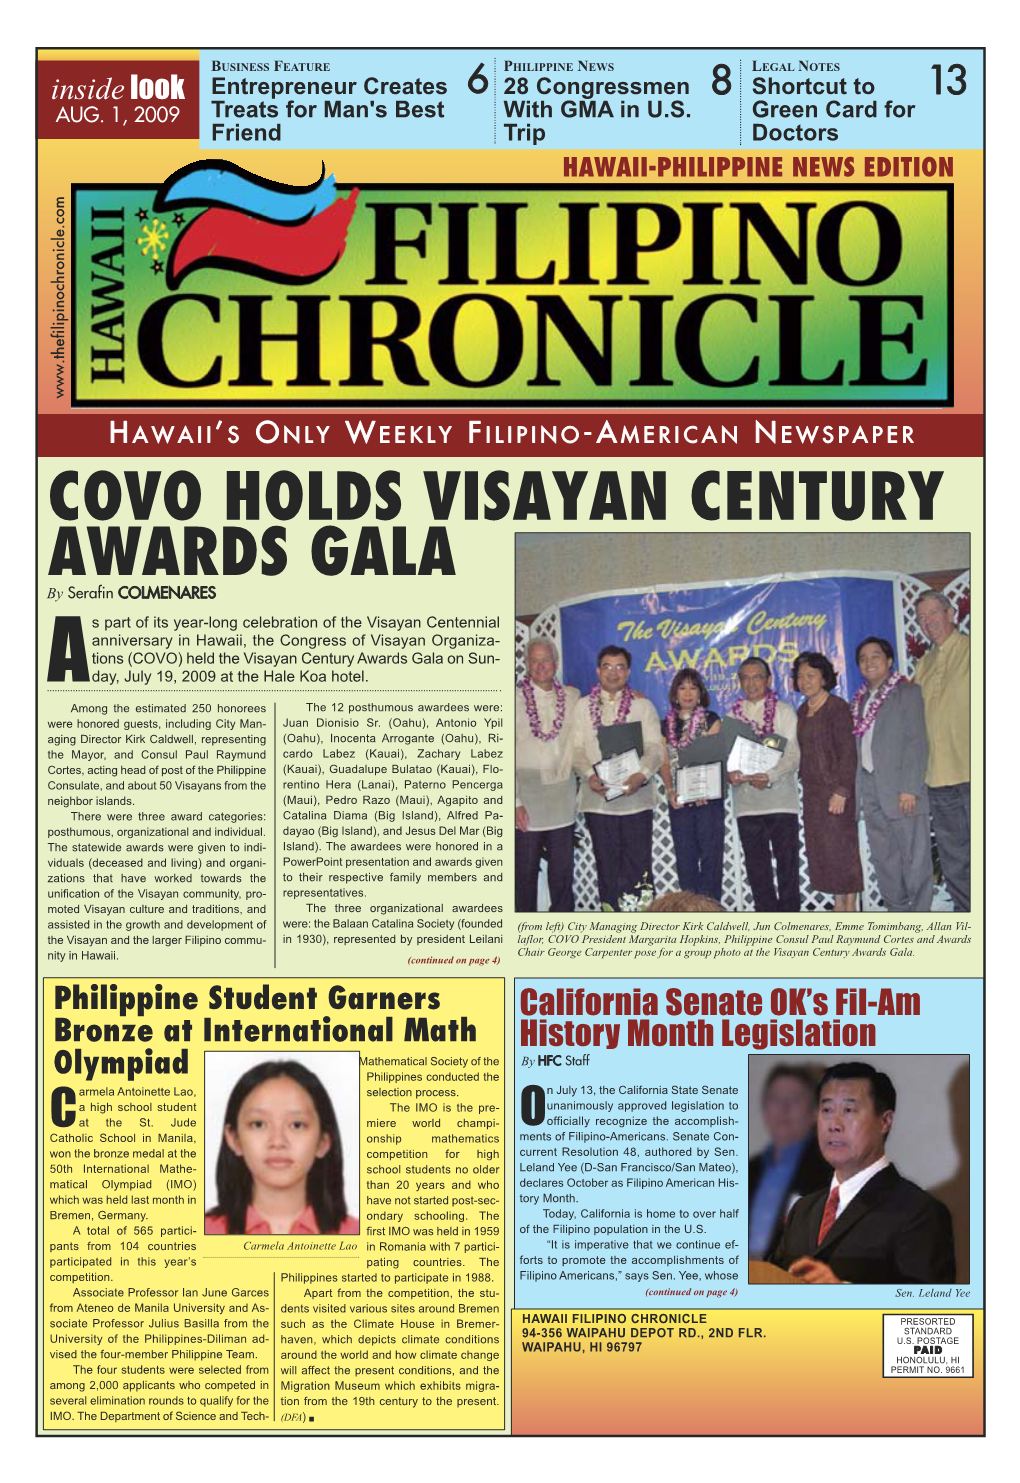 Covo Holds Visayan Century Awards Gala